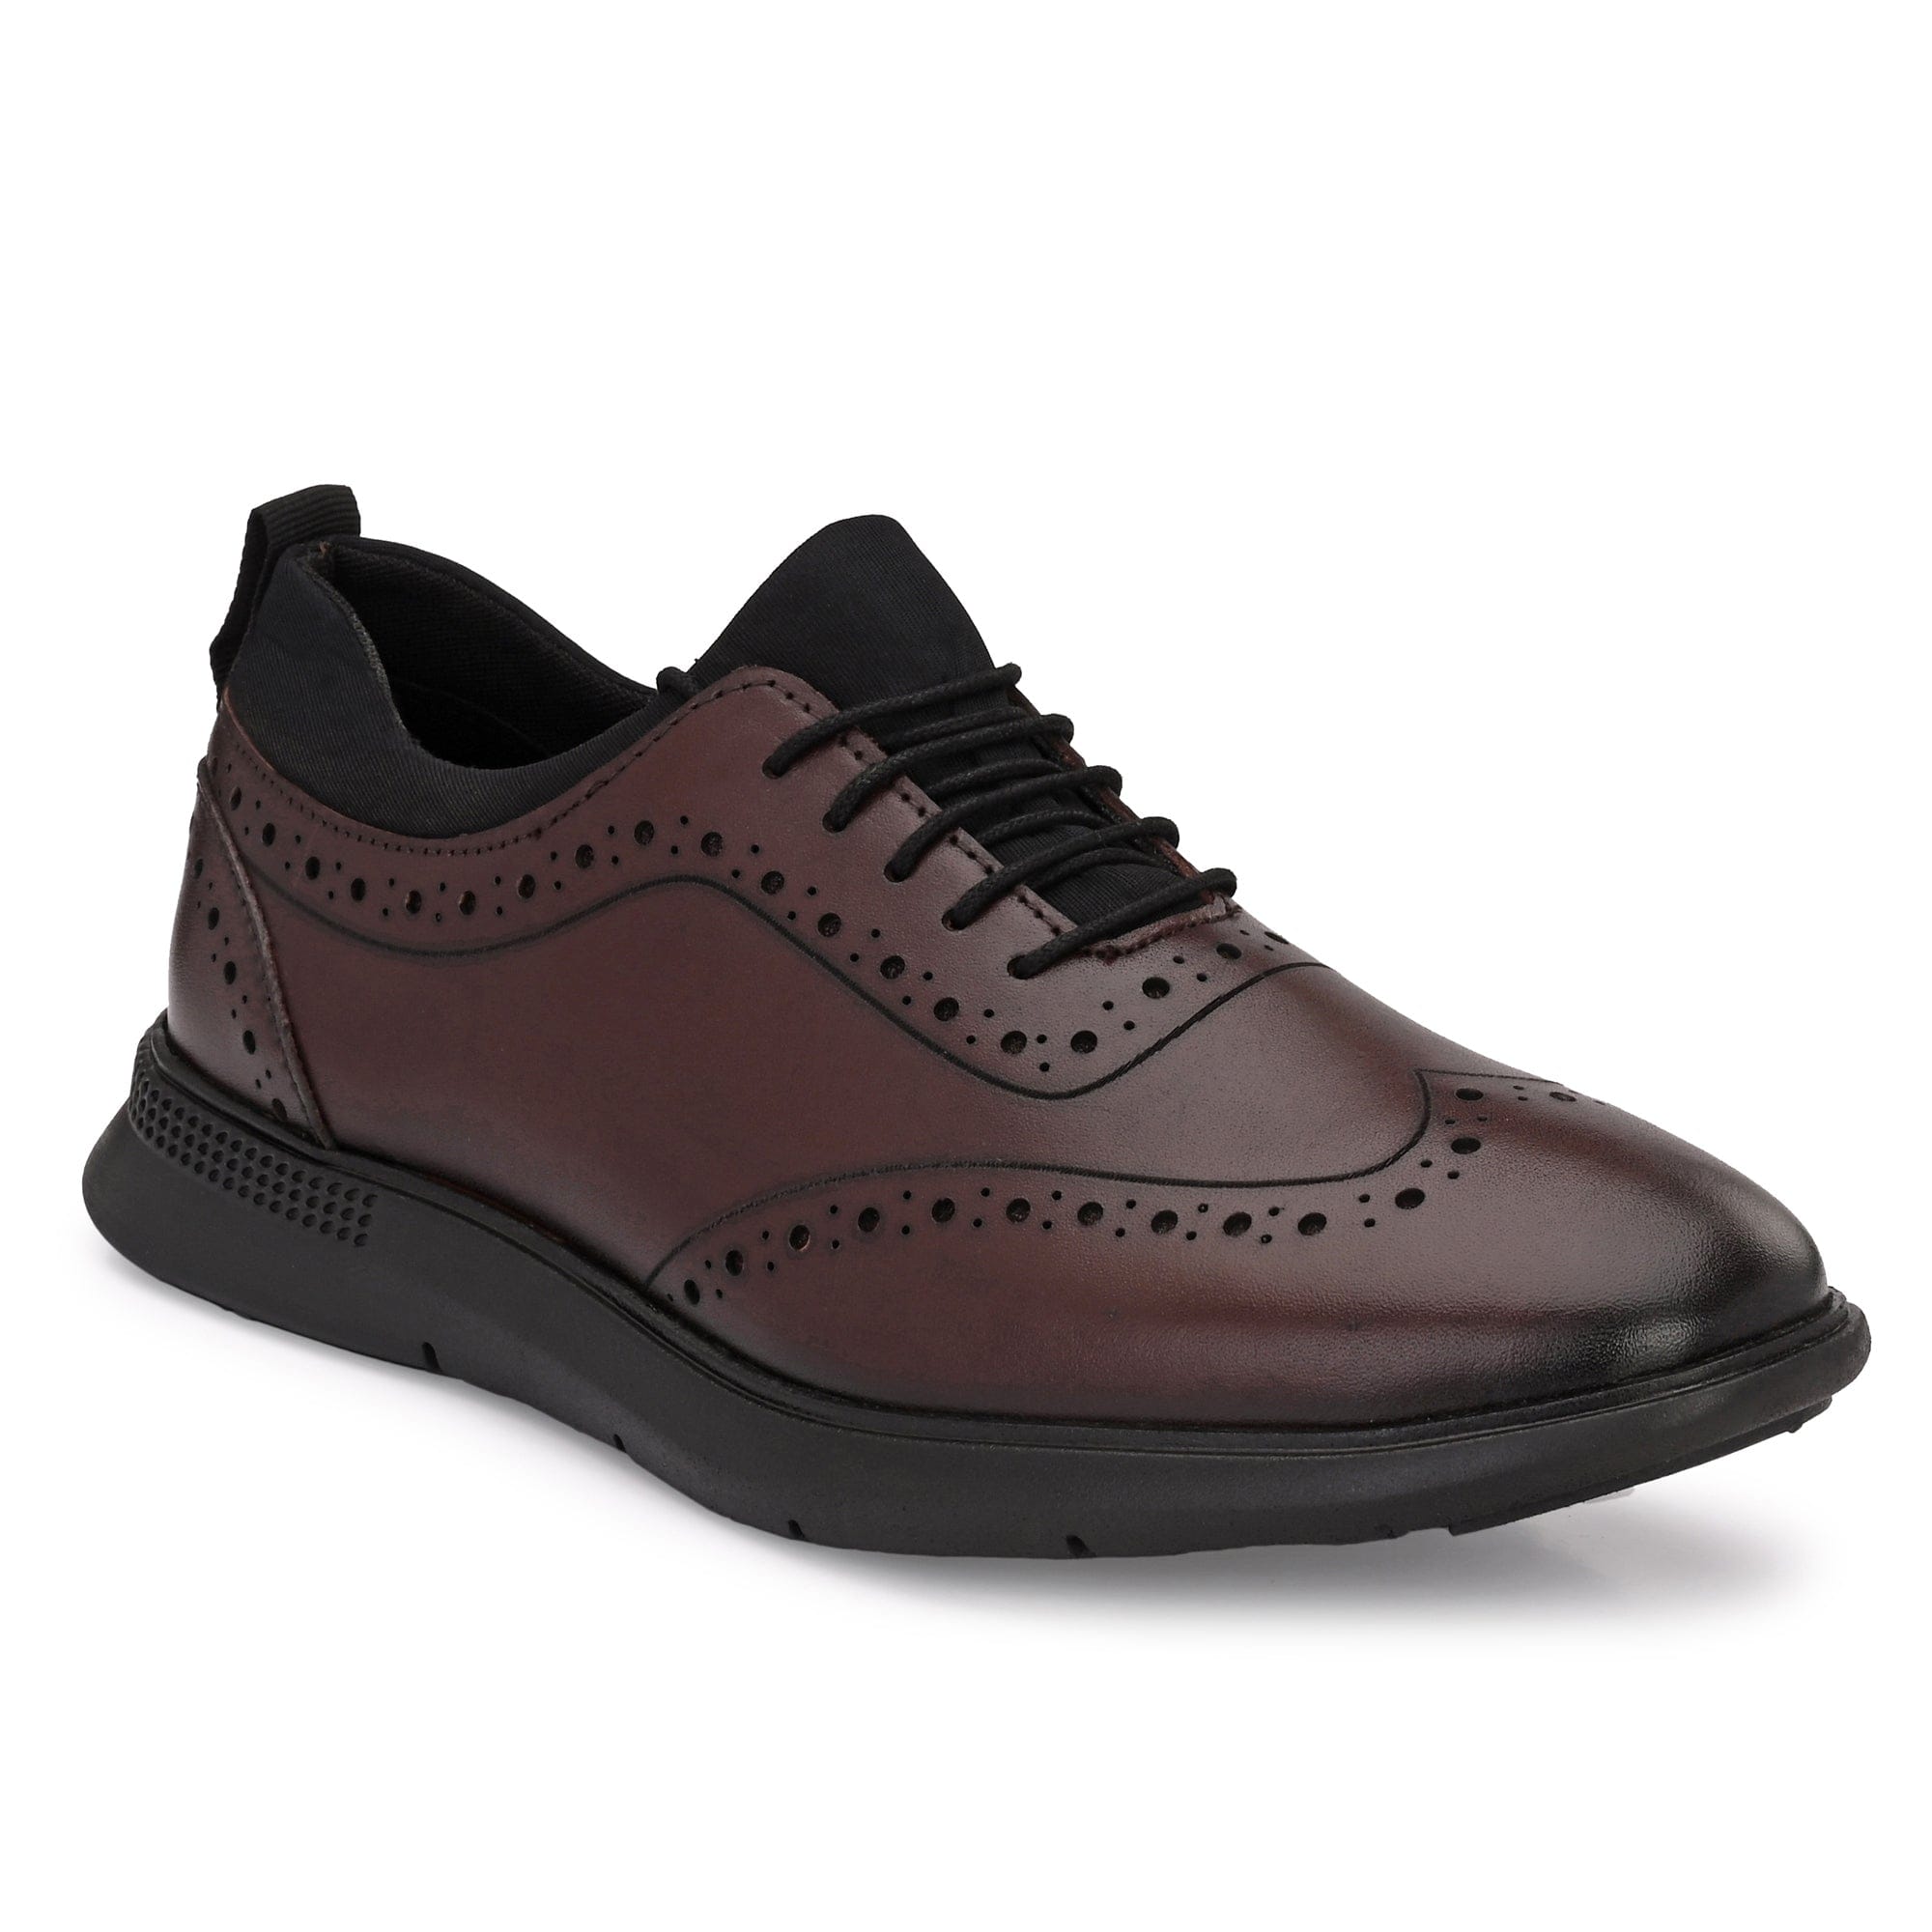 Legwork Brogue 2.0 Coffee Brown Italian Leather Shoes